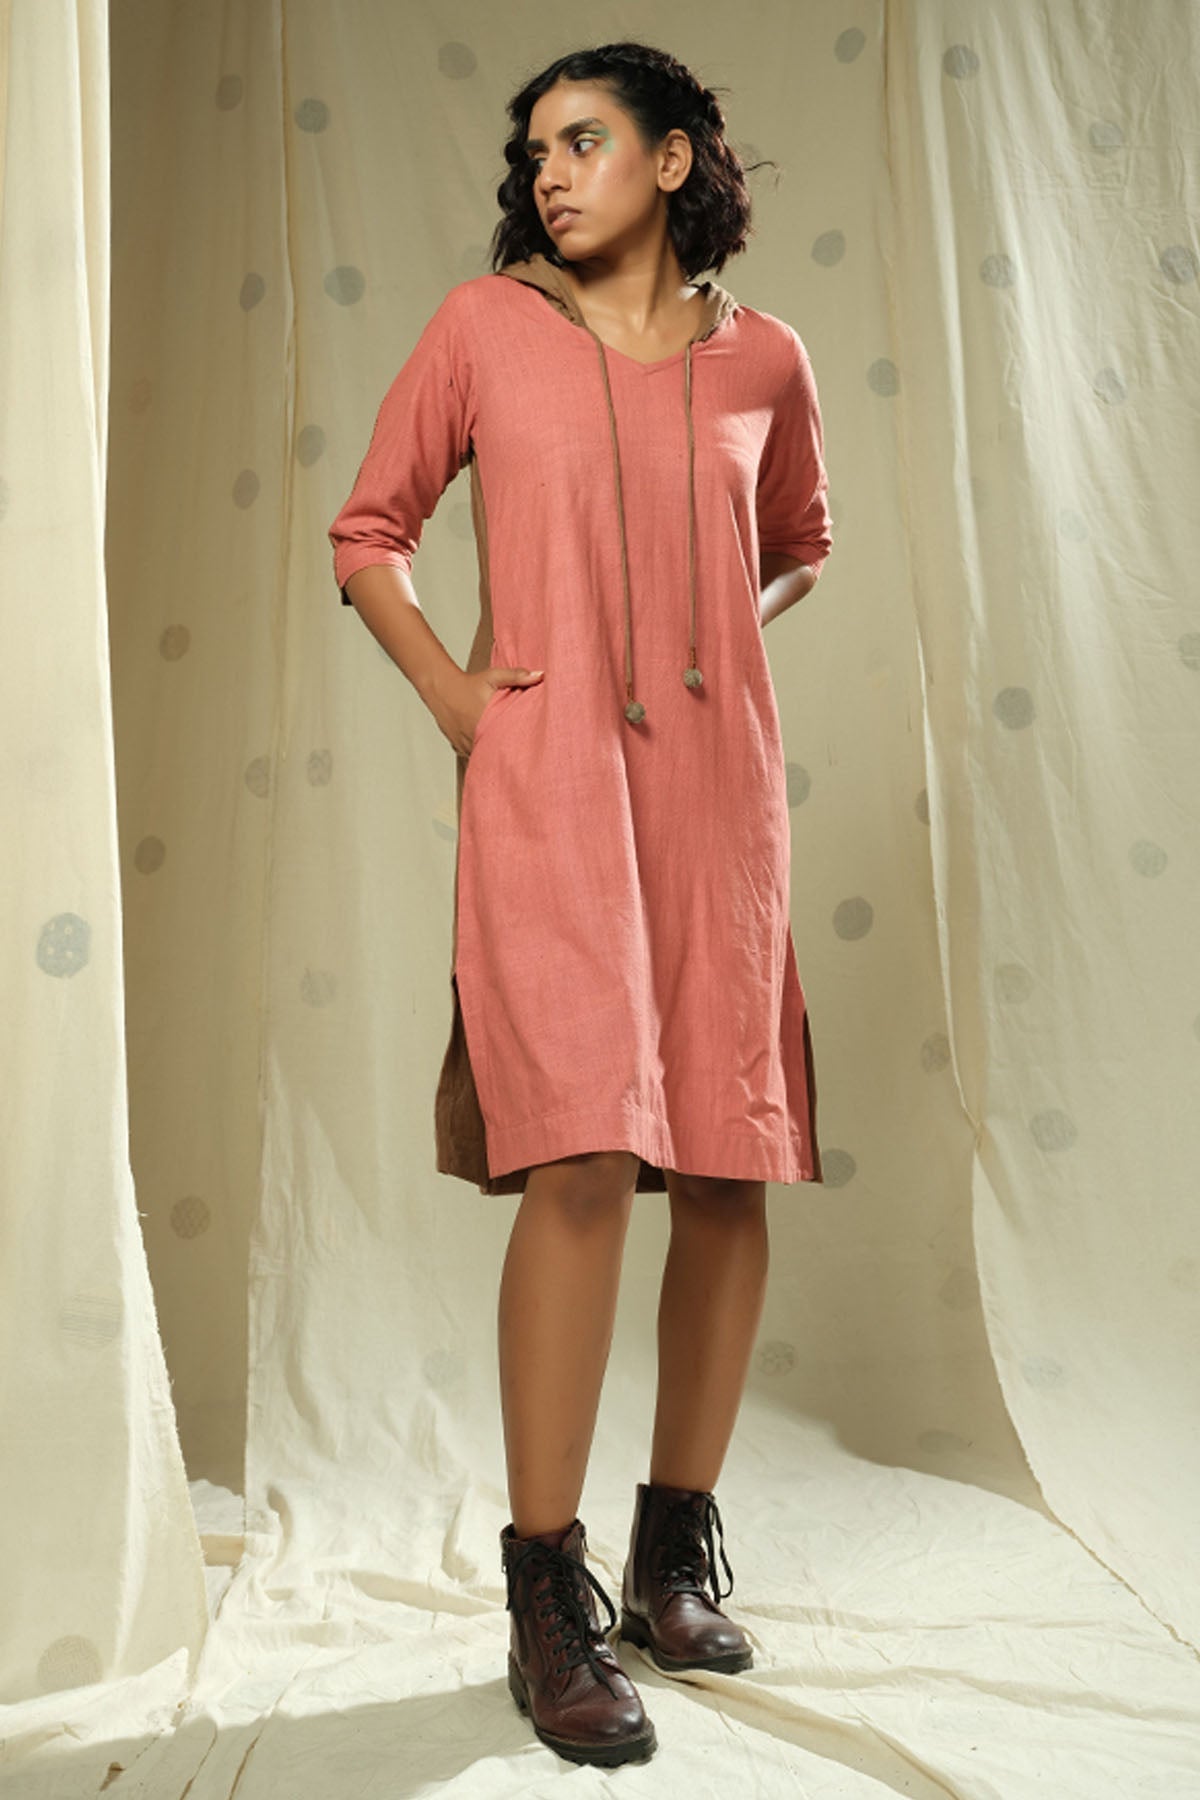 Buy Thread Game Pink Knee Length Hoodie Dress For Women online at ScrollnShops